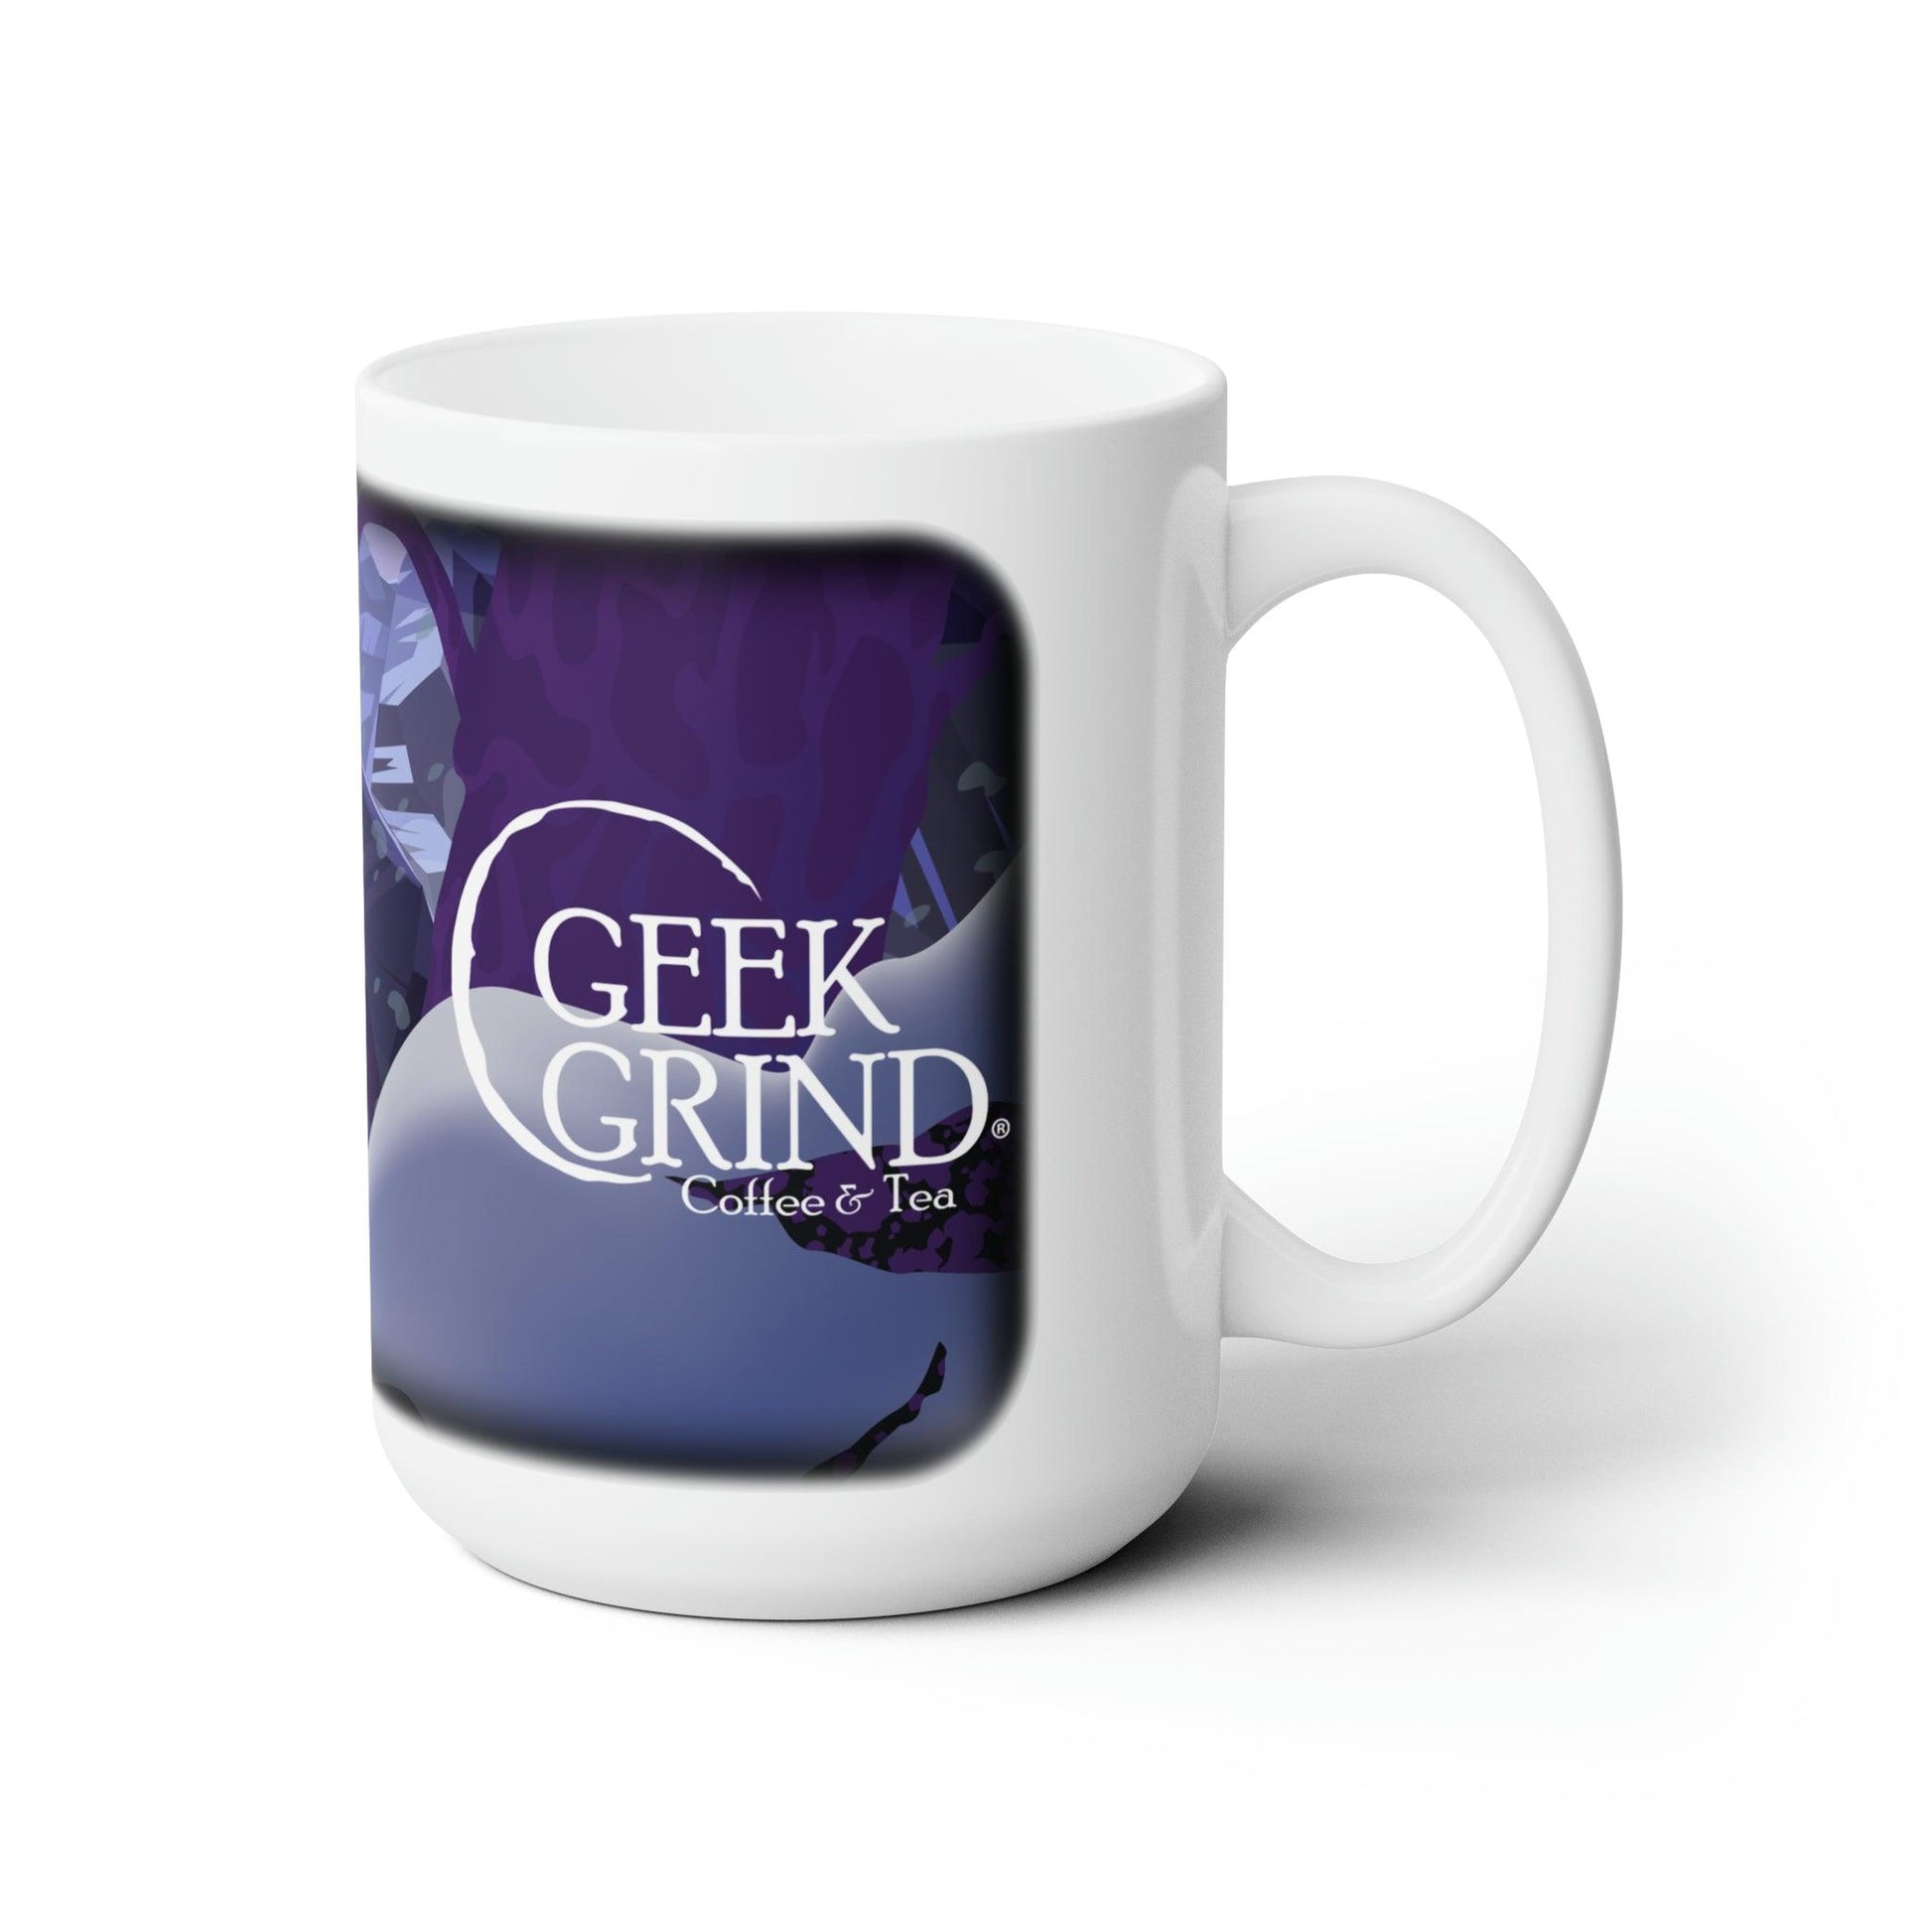 Tracks of the Yeti Mug – Geek Grind Coffee